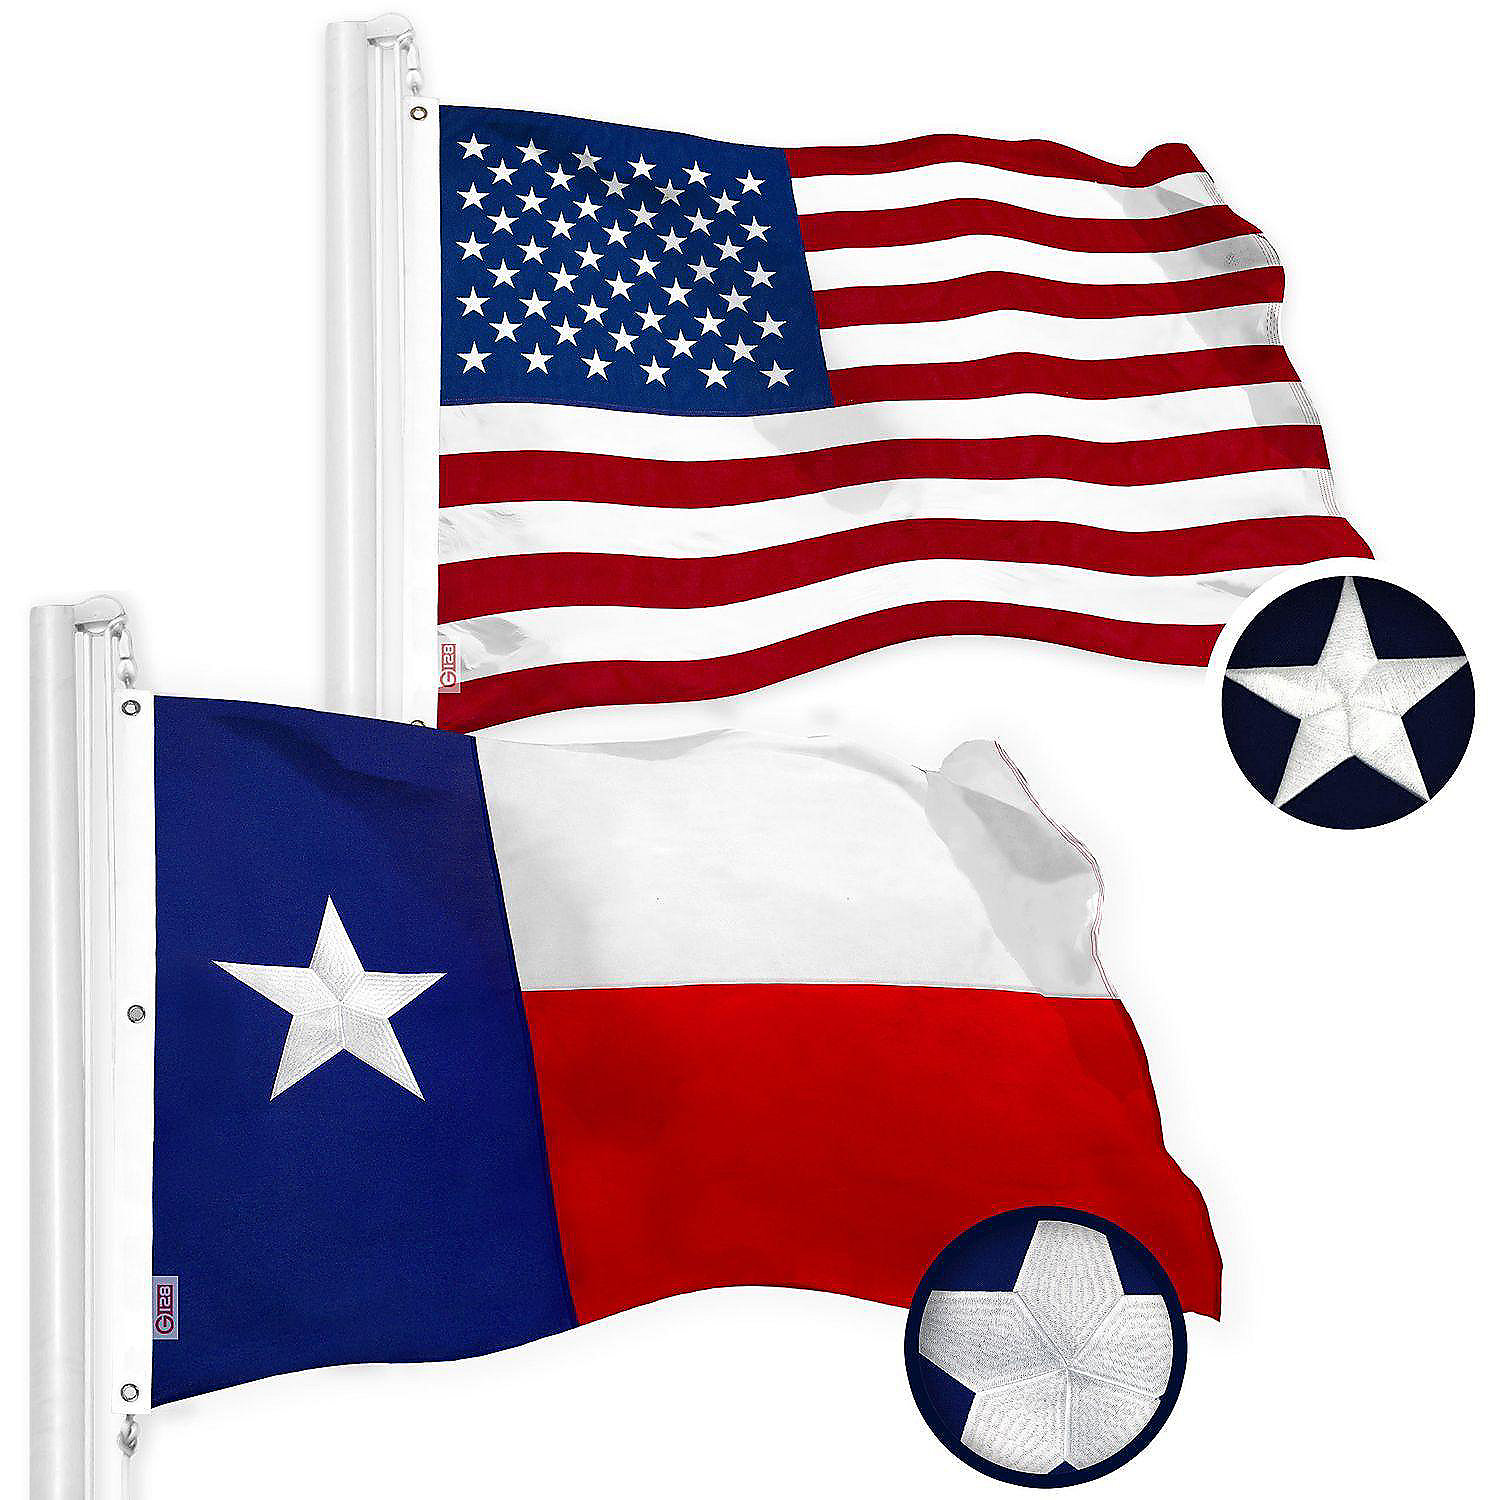 3 PACK of 3x5 FT USA America Flag Stars Stripes Brass Grommets 150D Polyester 